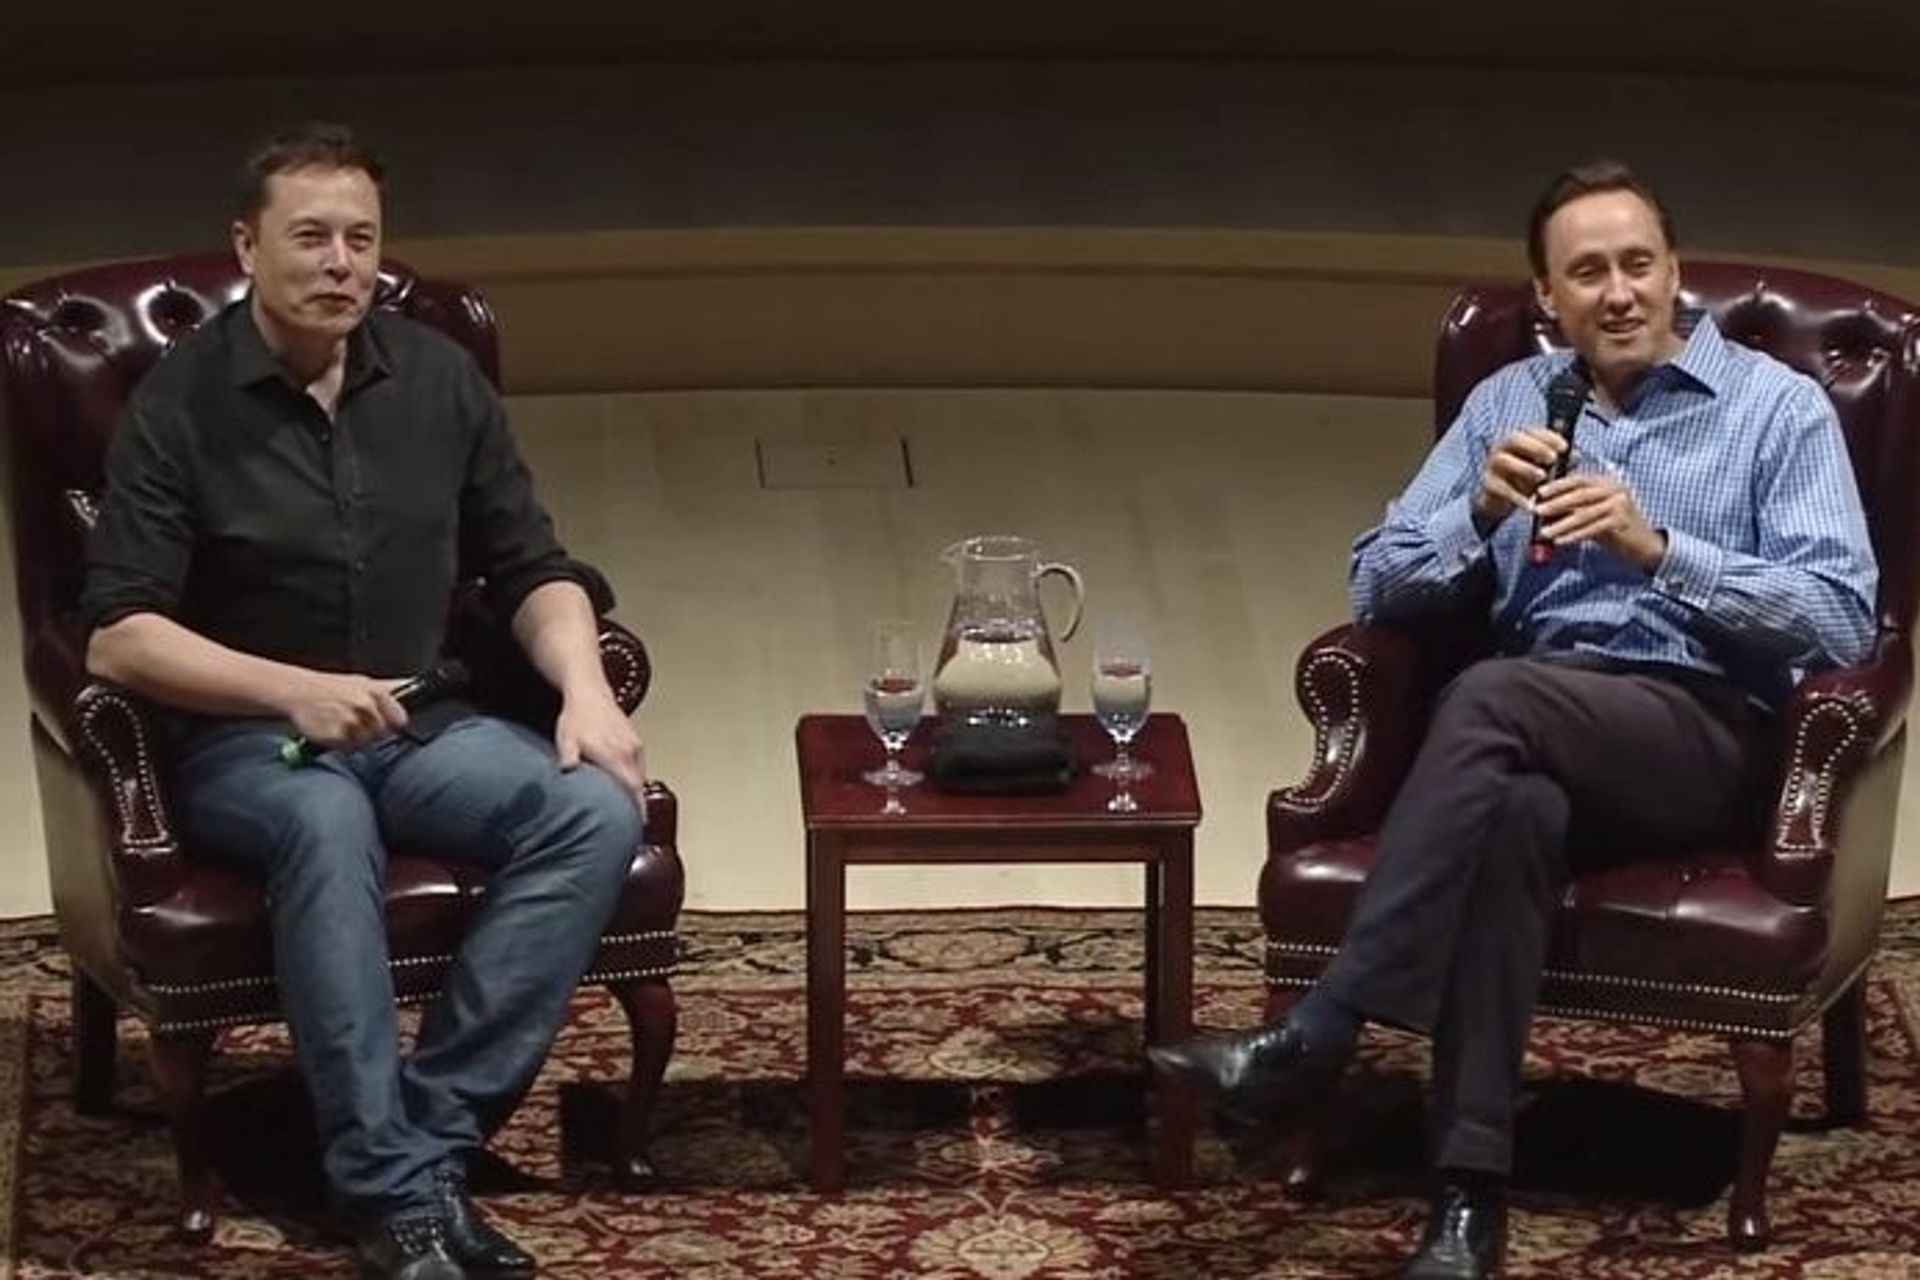 Conversation between the visionary entrepreneur Elon Musk and the famous investor Steve Jurvetson